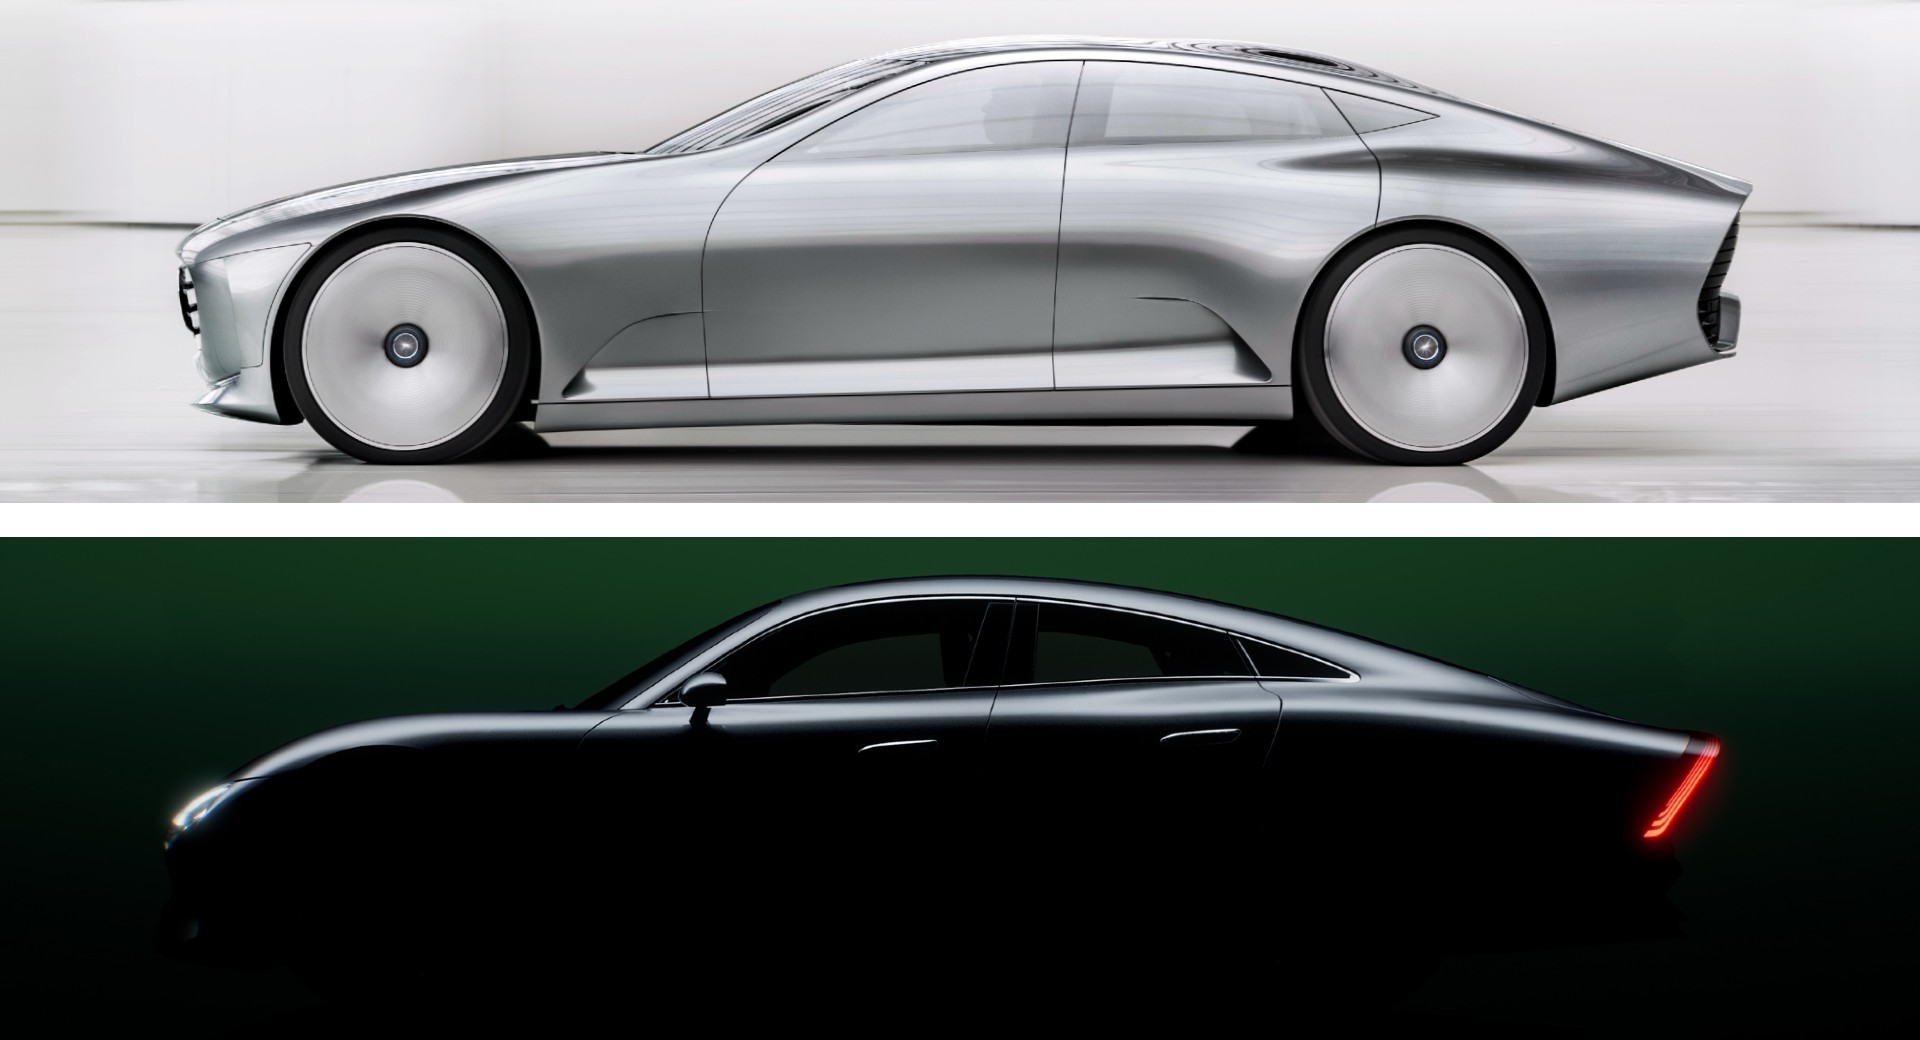 Noul Mercedes Vision EQXX - imagine lansata inaine de debutul din ianuarie